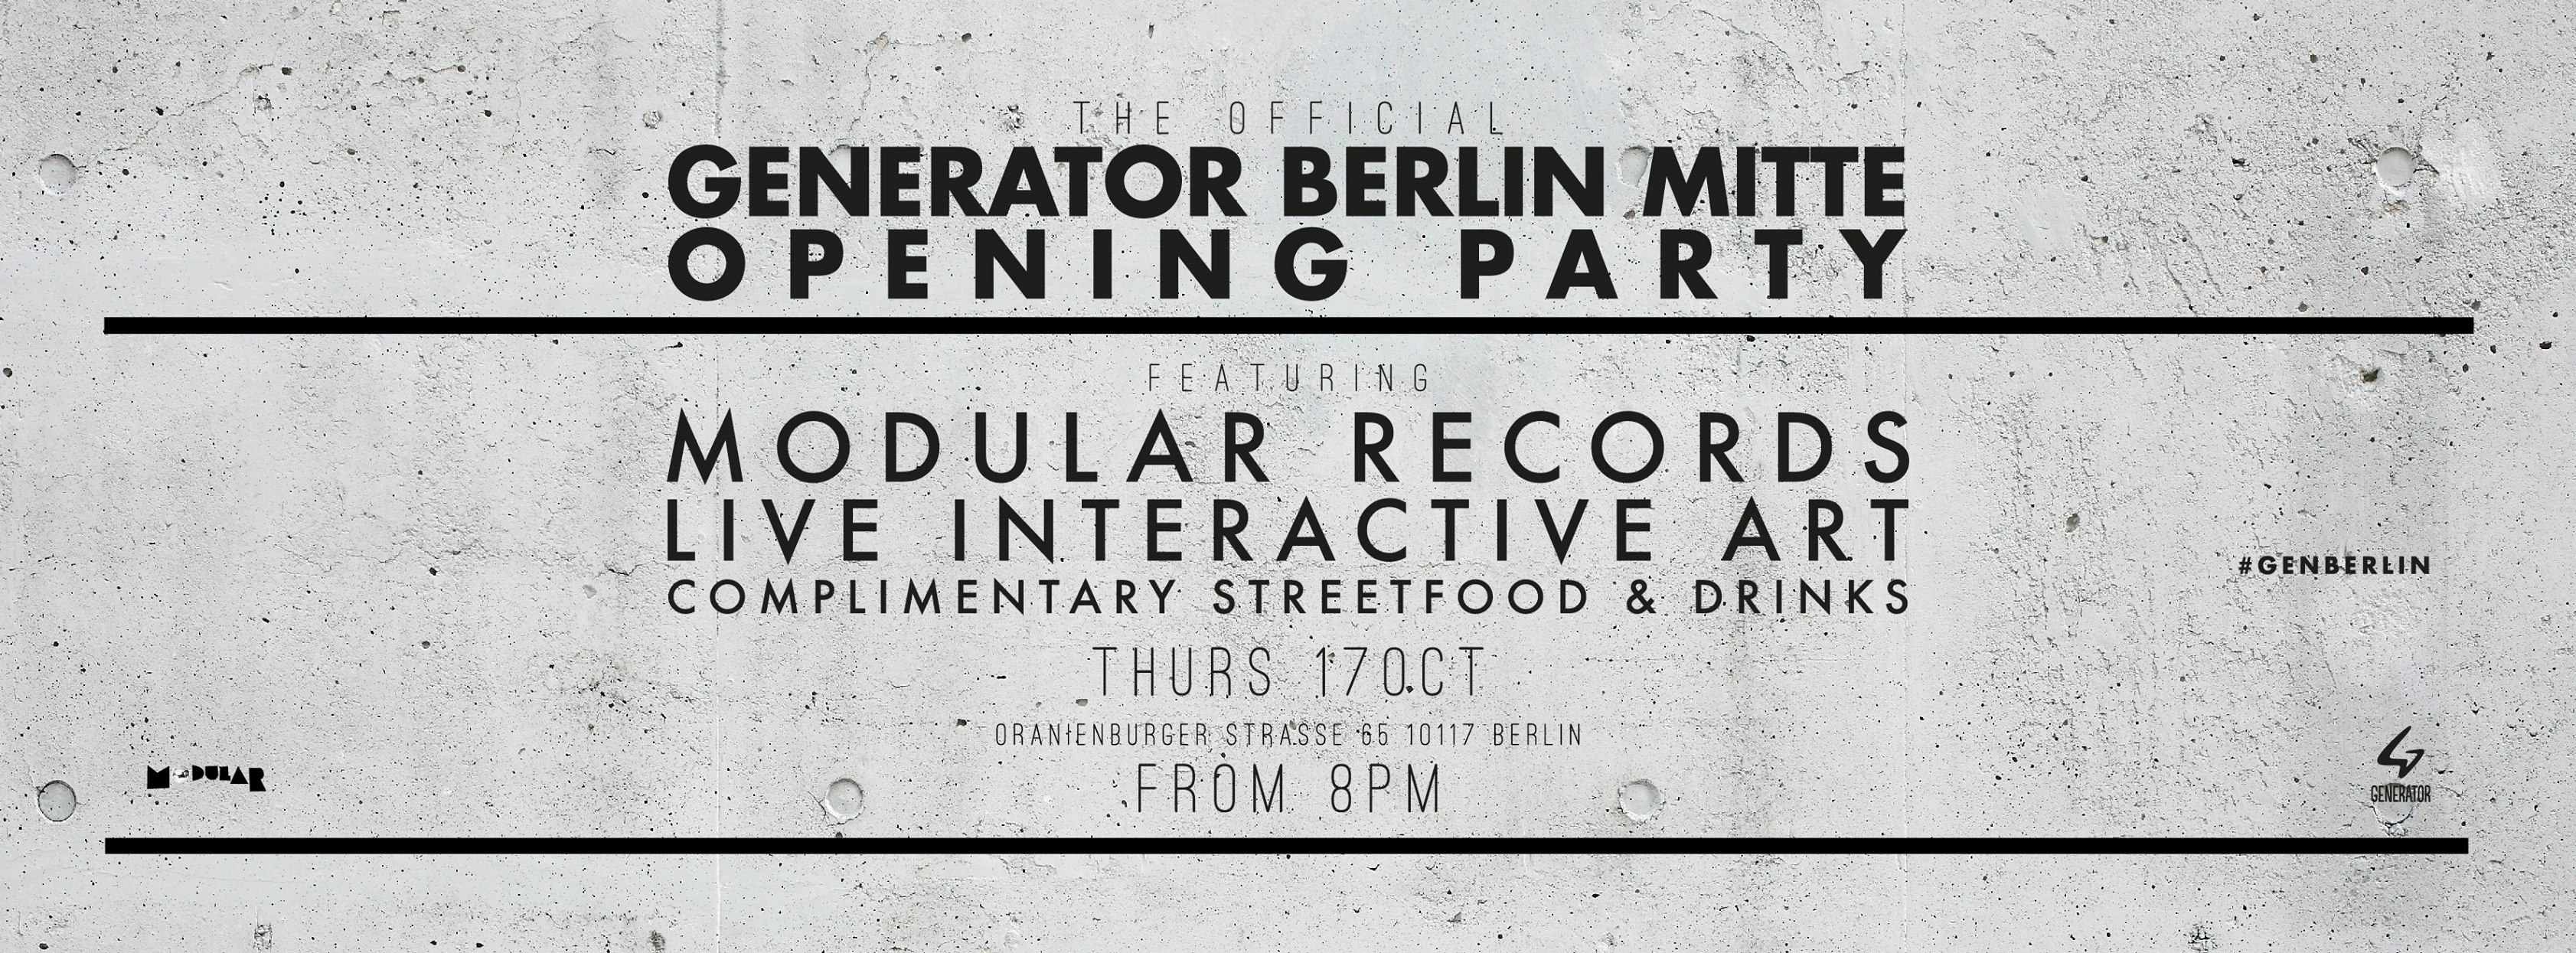 Evolution - Generator Berlin Mitte opening party